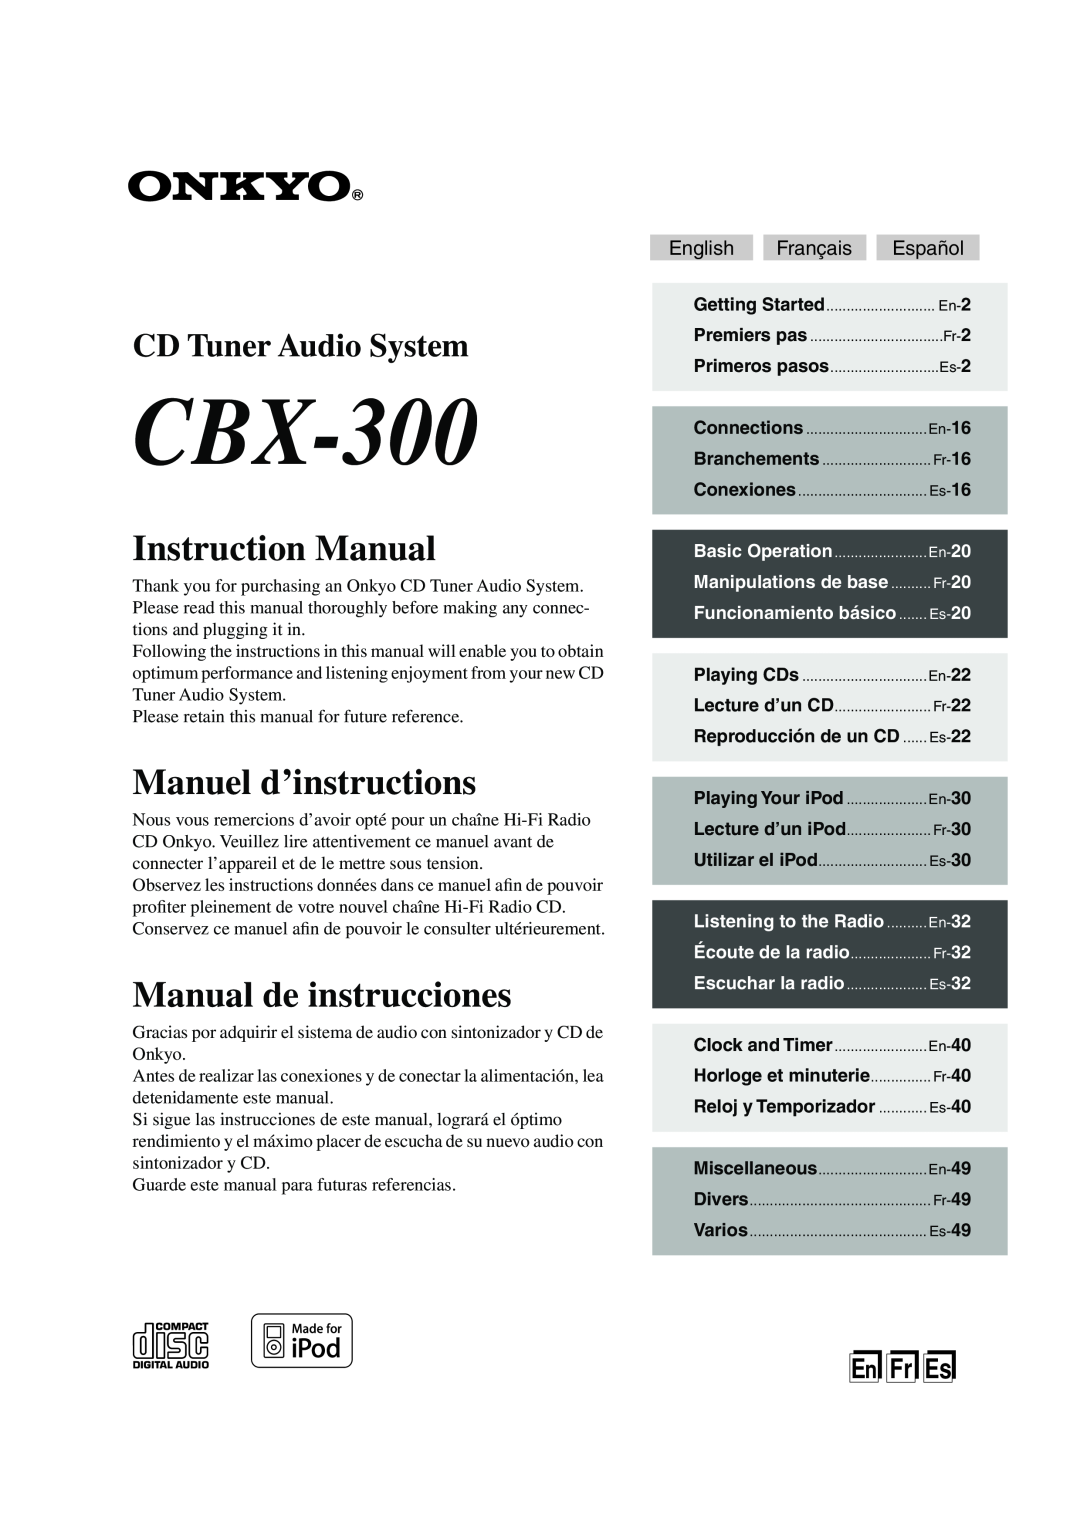 Onkyo manual CBX-300 CD Receiver System 